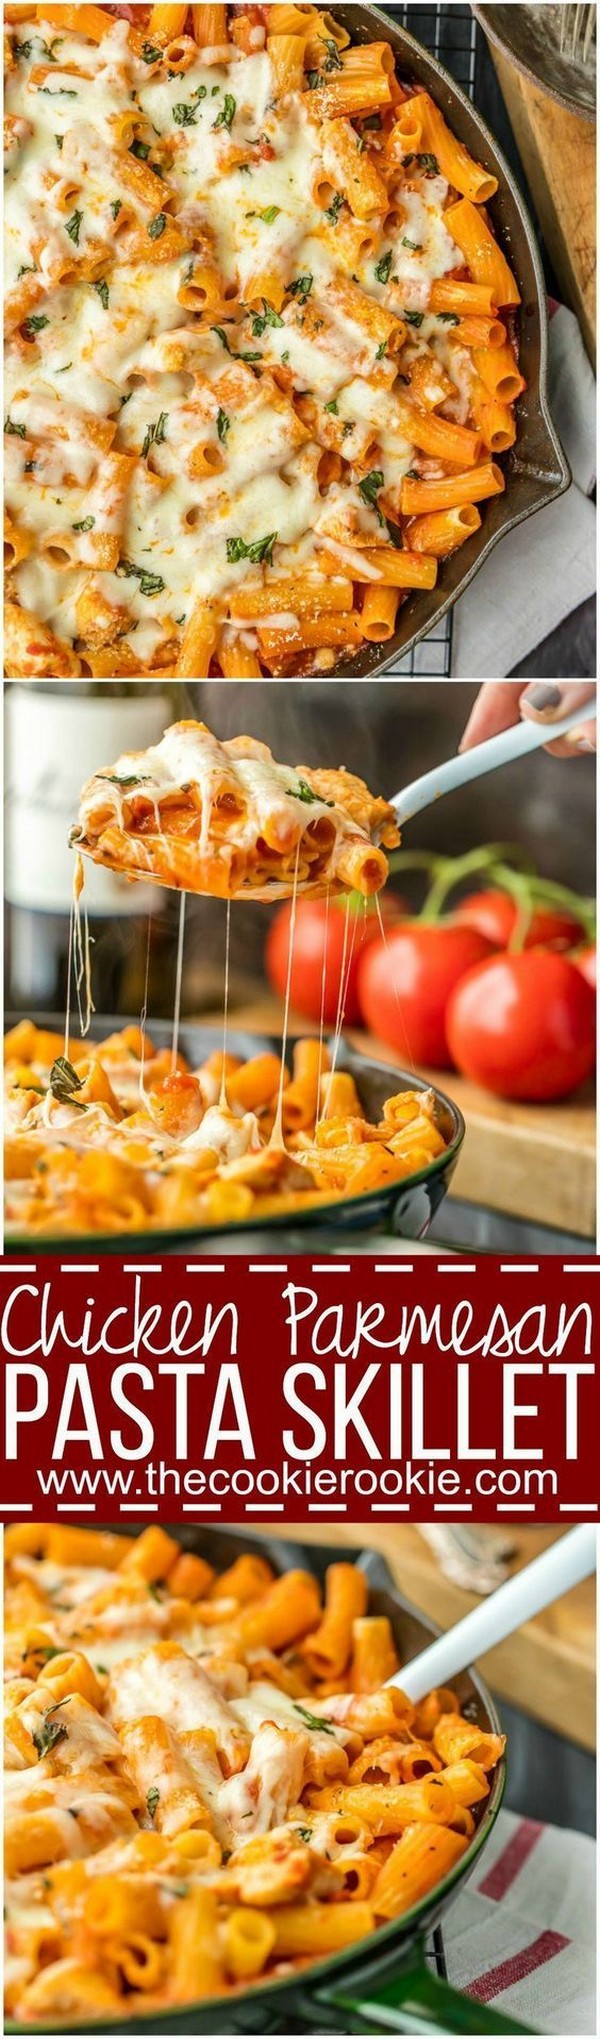 Chicken Parmesan Pasta Recipe